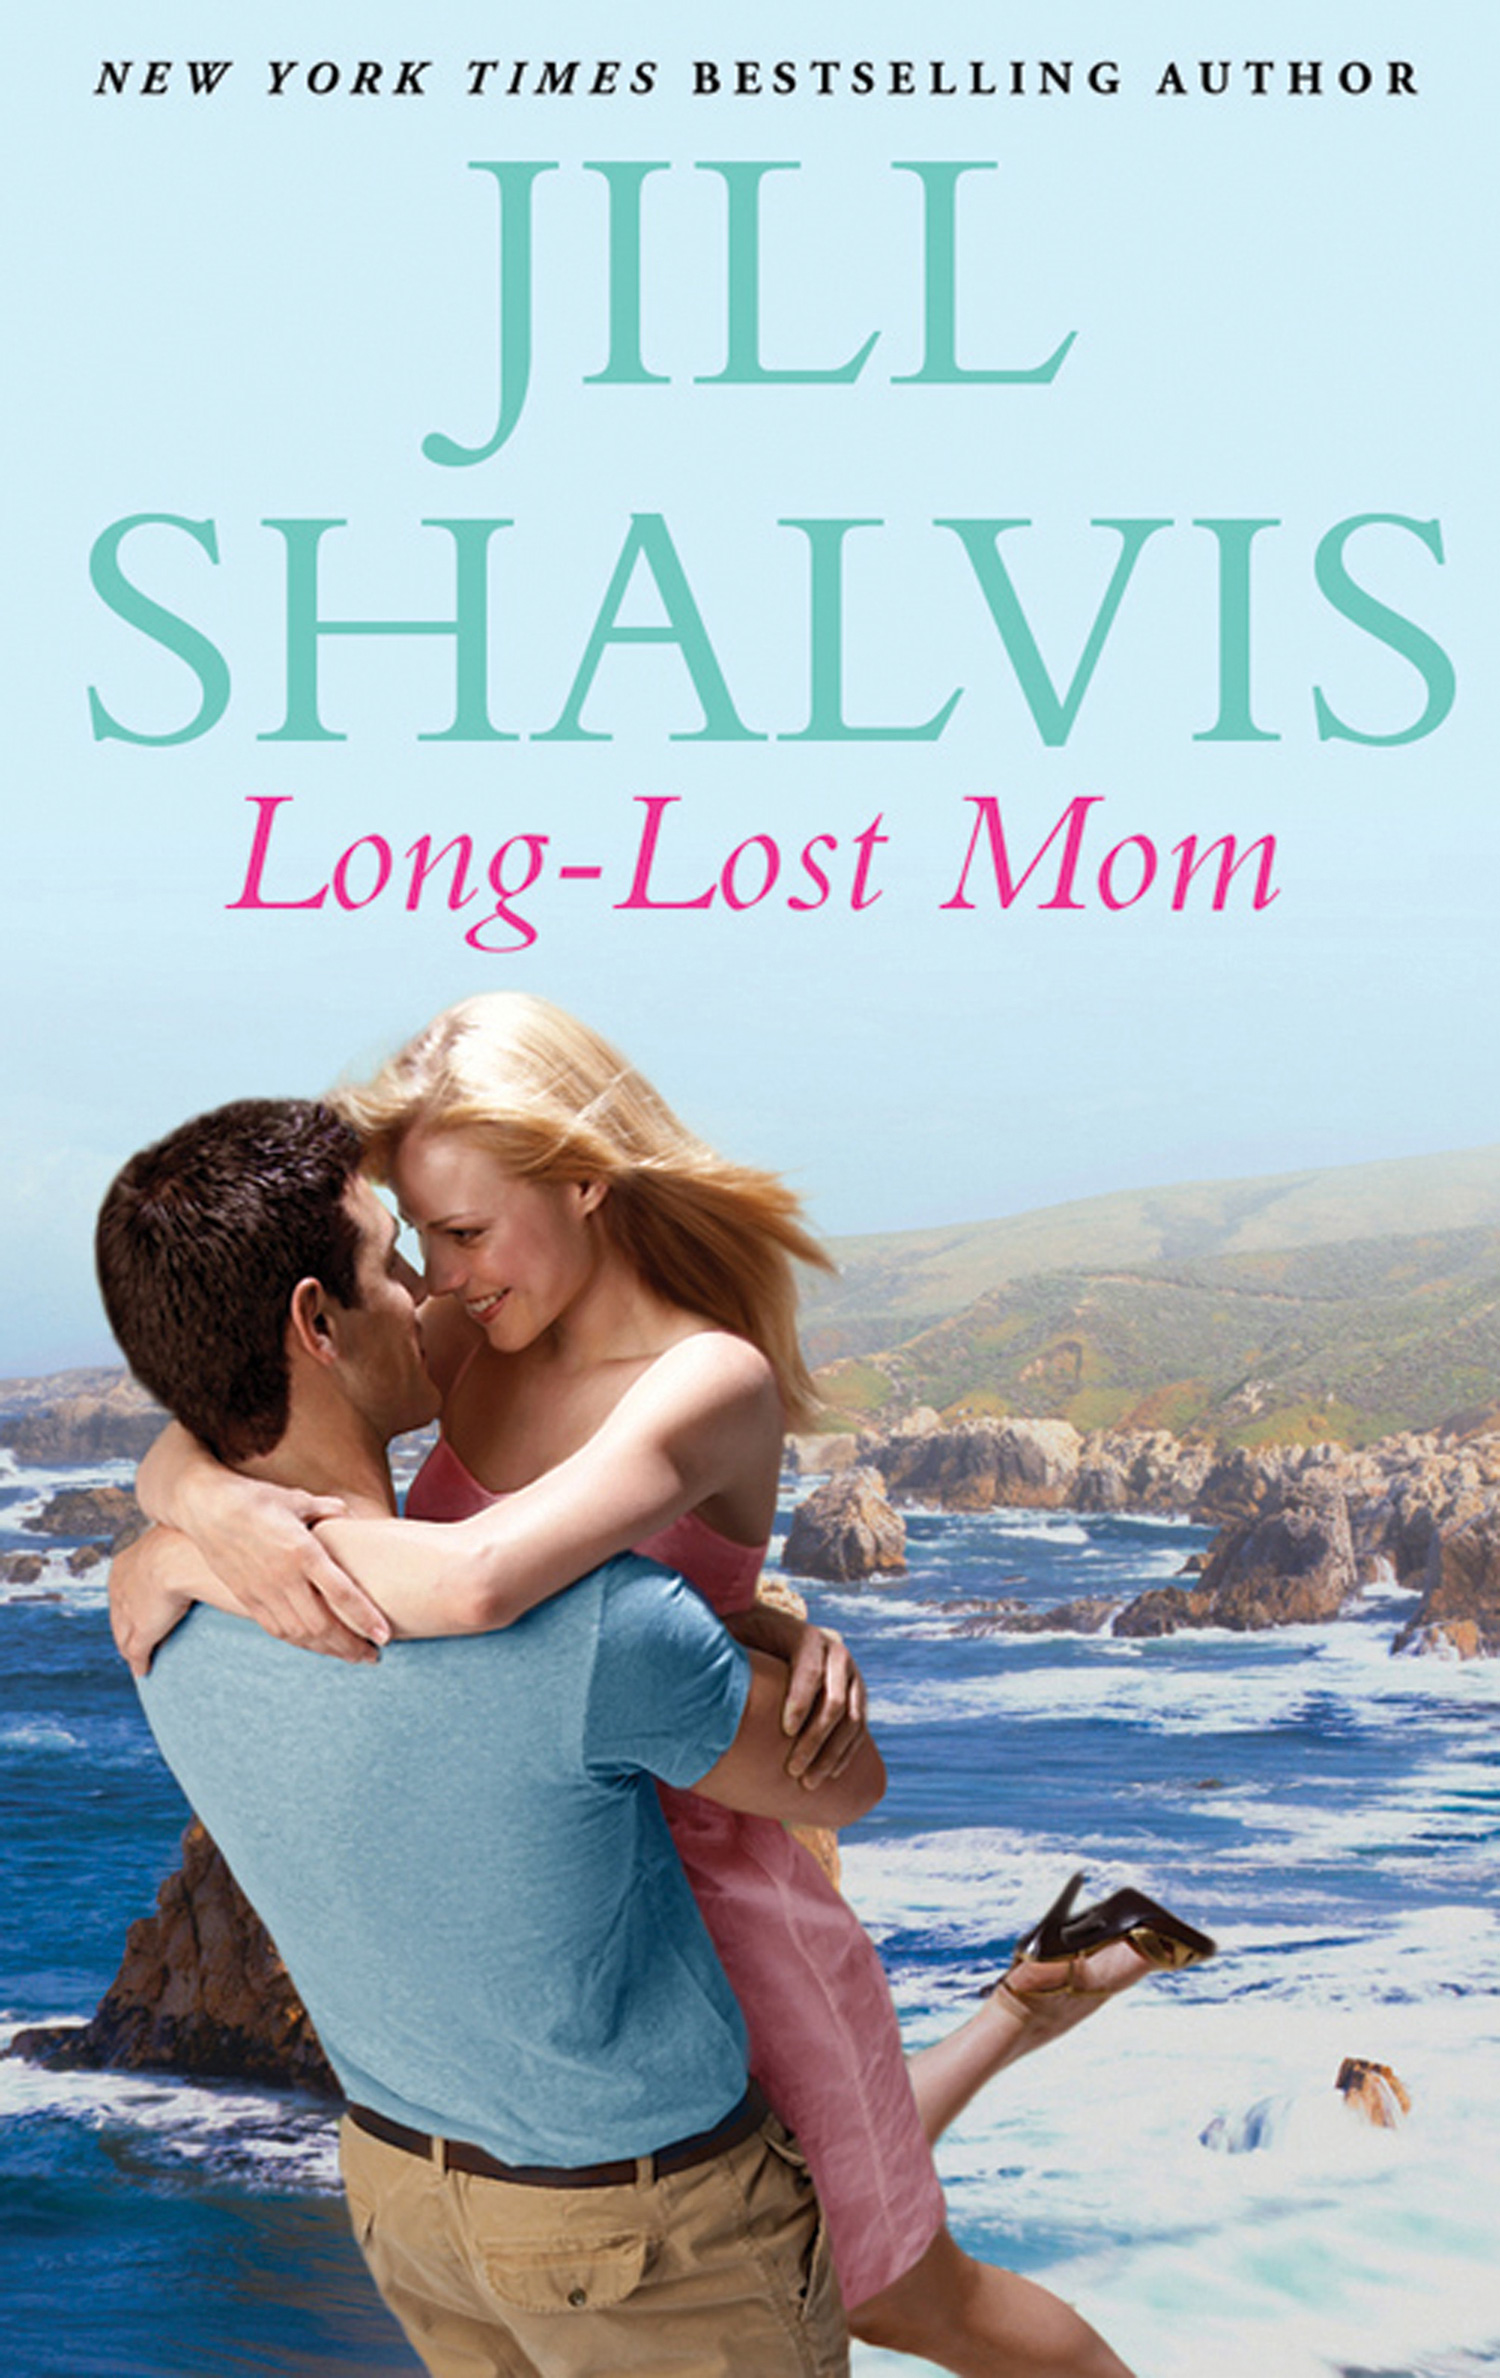 The book is long. Jill Shalvis. Lost mom. Эвива Ромм Джилл книги. Авива Ромм Джилл книги.